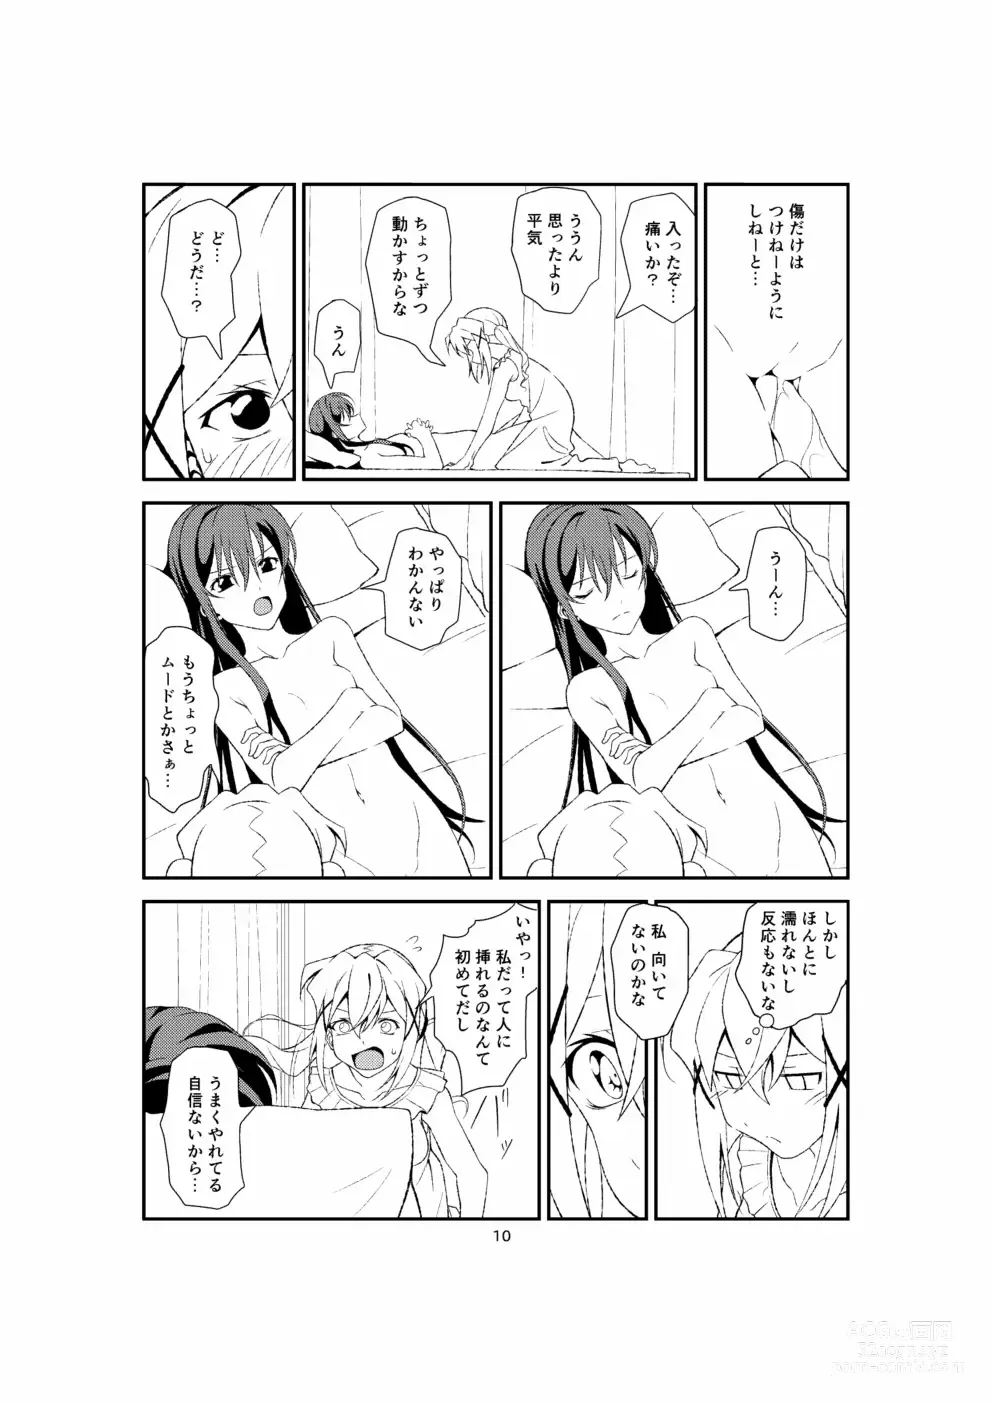 Page 9 of doujinshi Fish or Rabbit